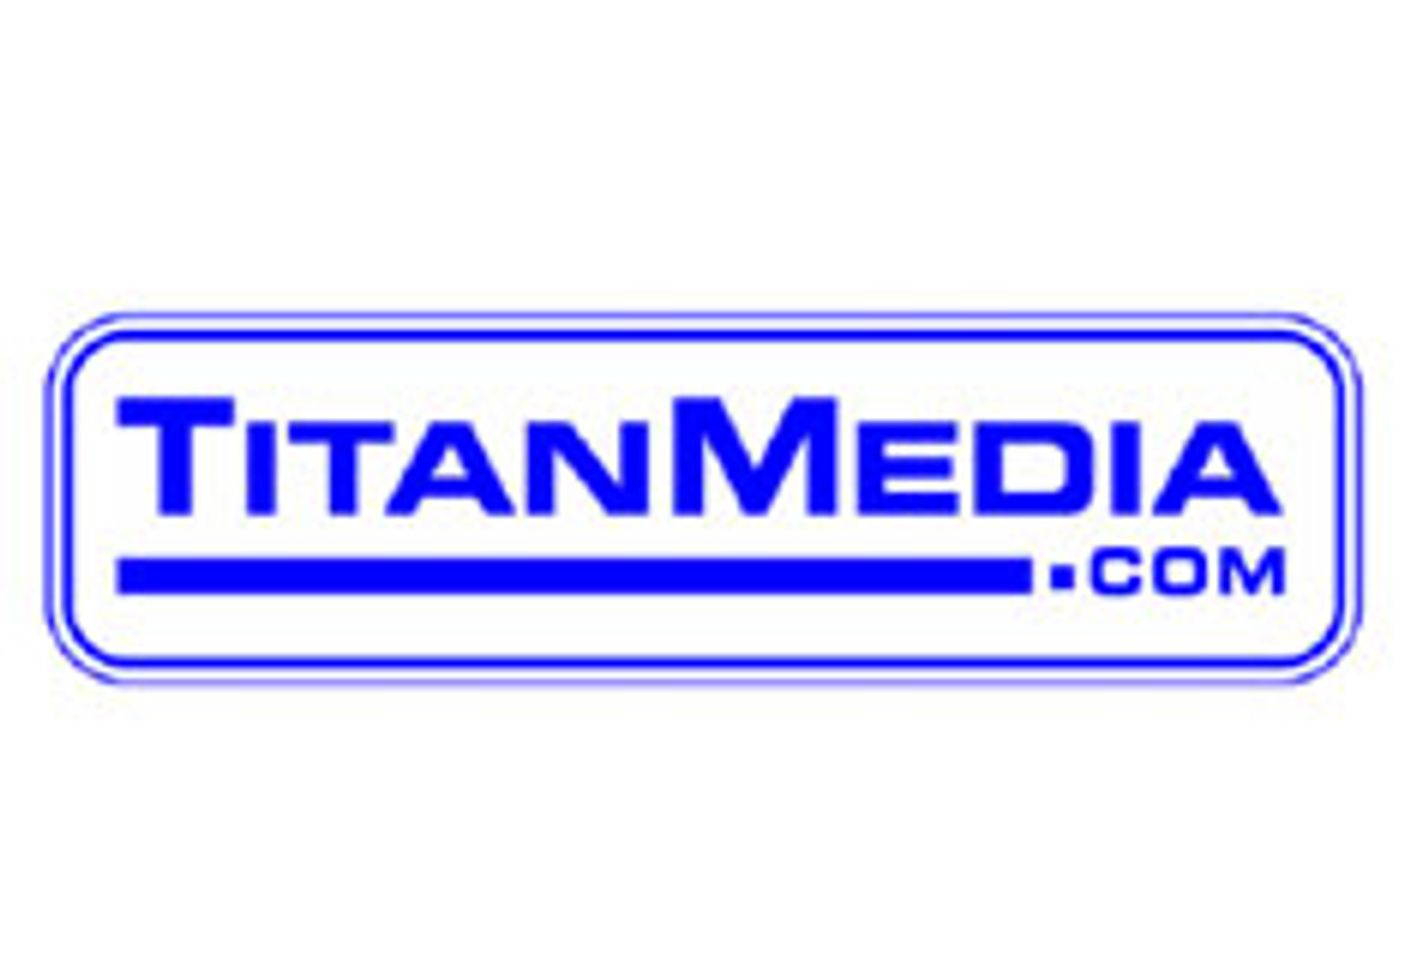 Titan Signs Distribution Deal With Cal Vista Australia